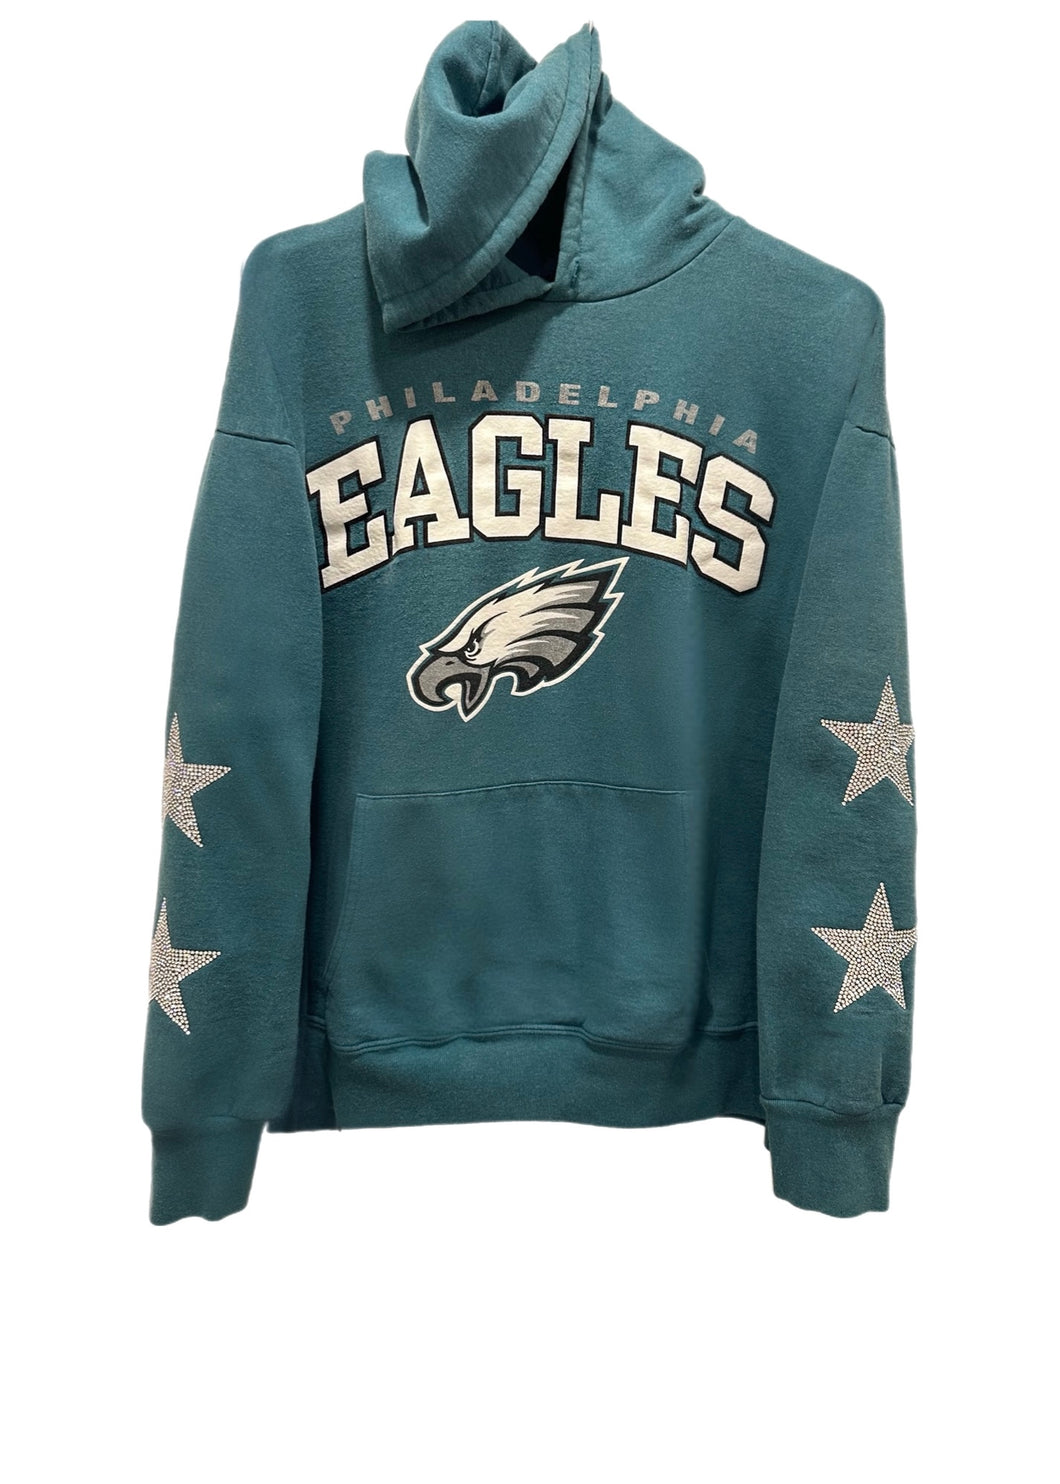 Philadelphia Eagles, NFL One of a KIND Vintage Hoodie with Crystal Star Design.